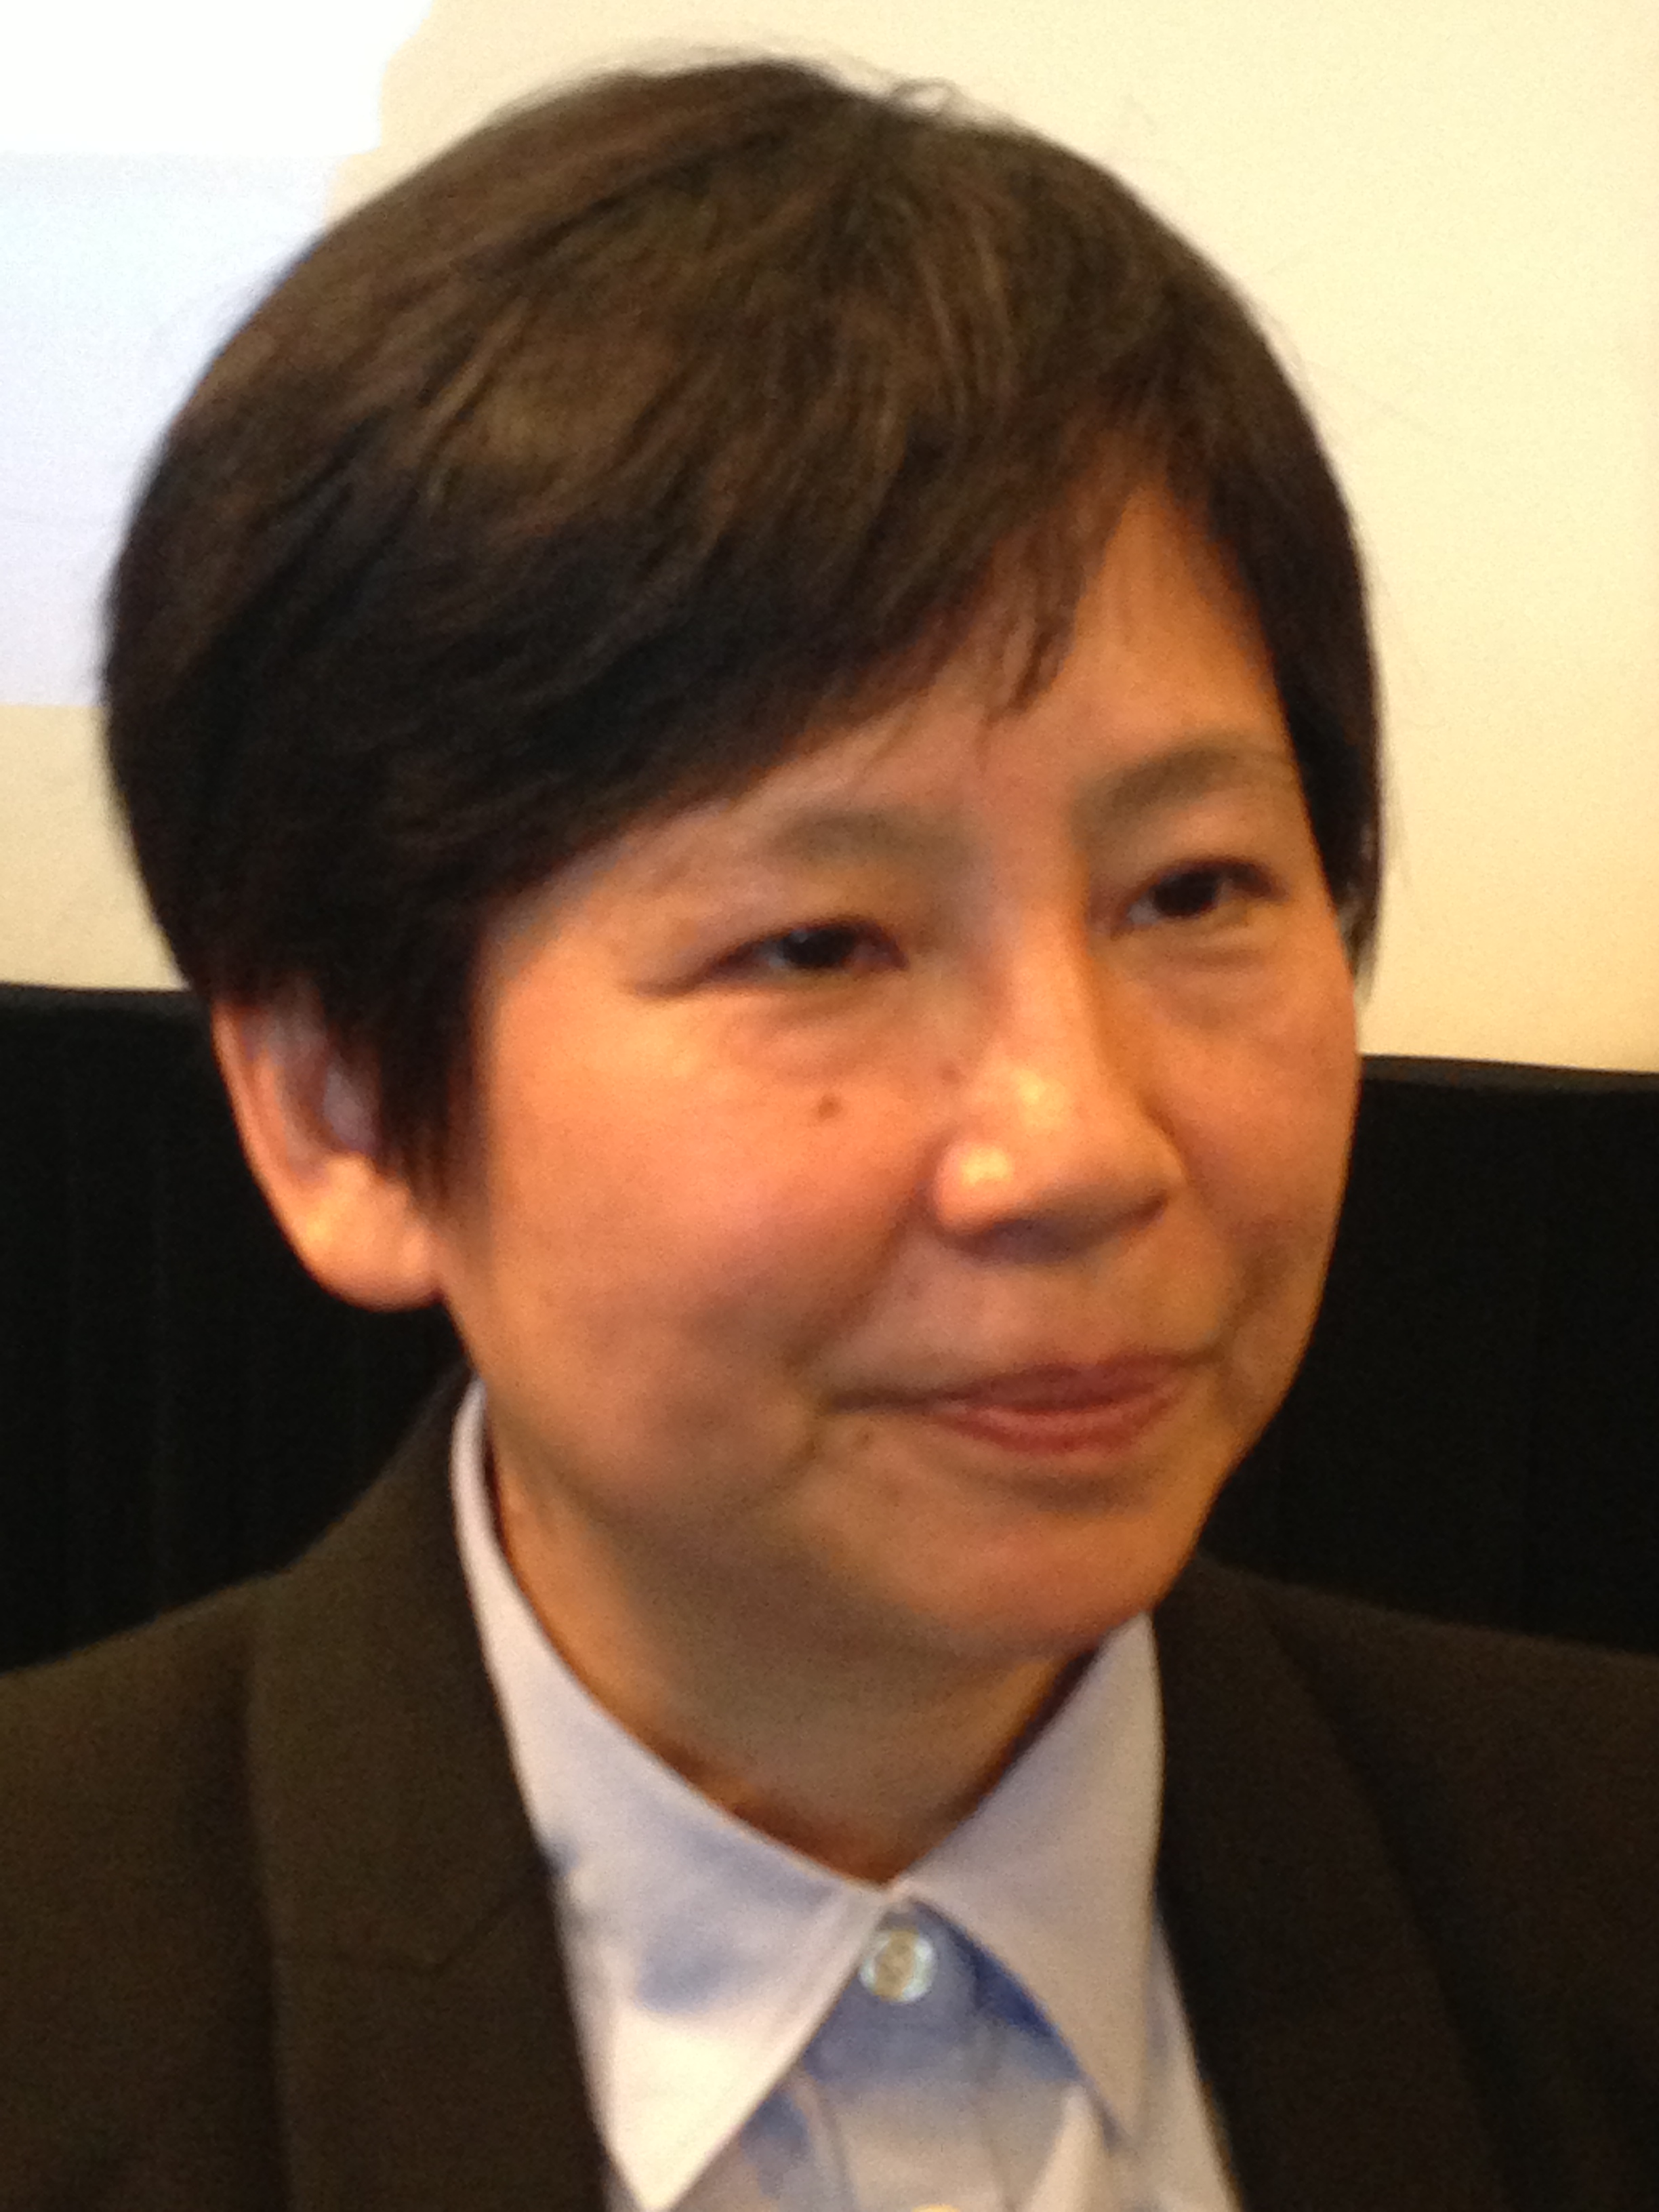 I-Fei Chang, CEO of Greenland USA